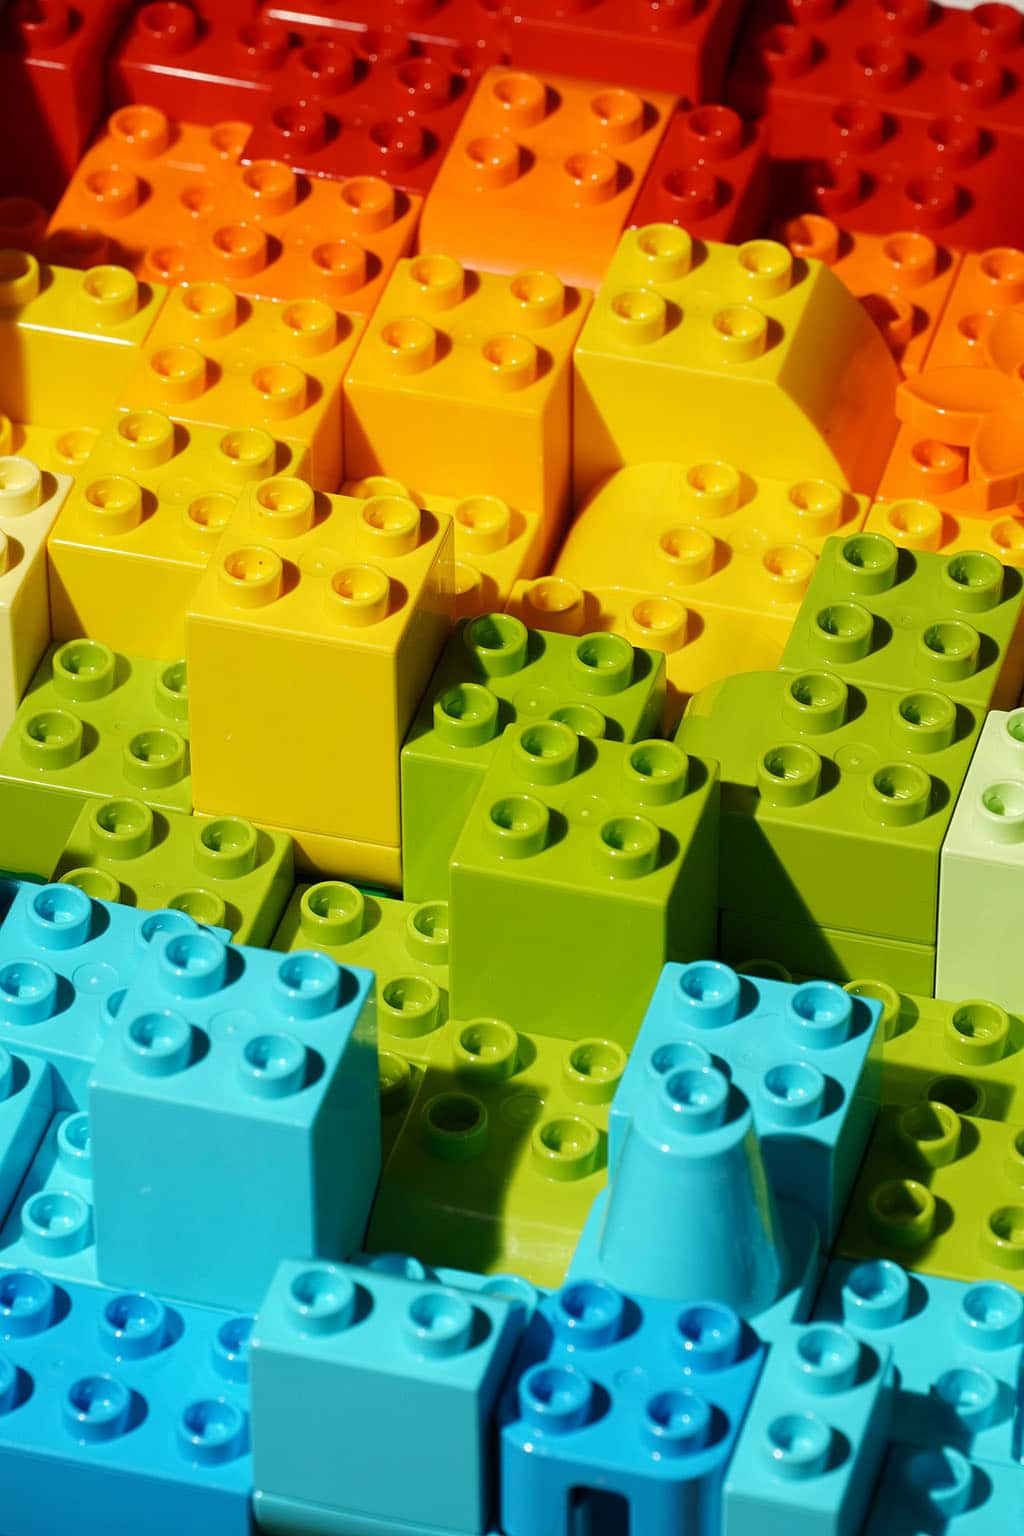 Lego-sen-unsplash